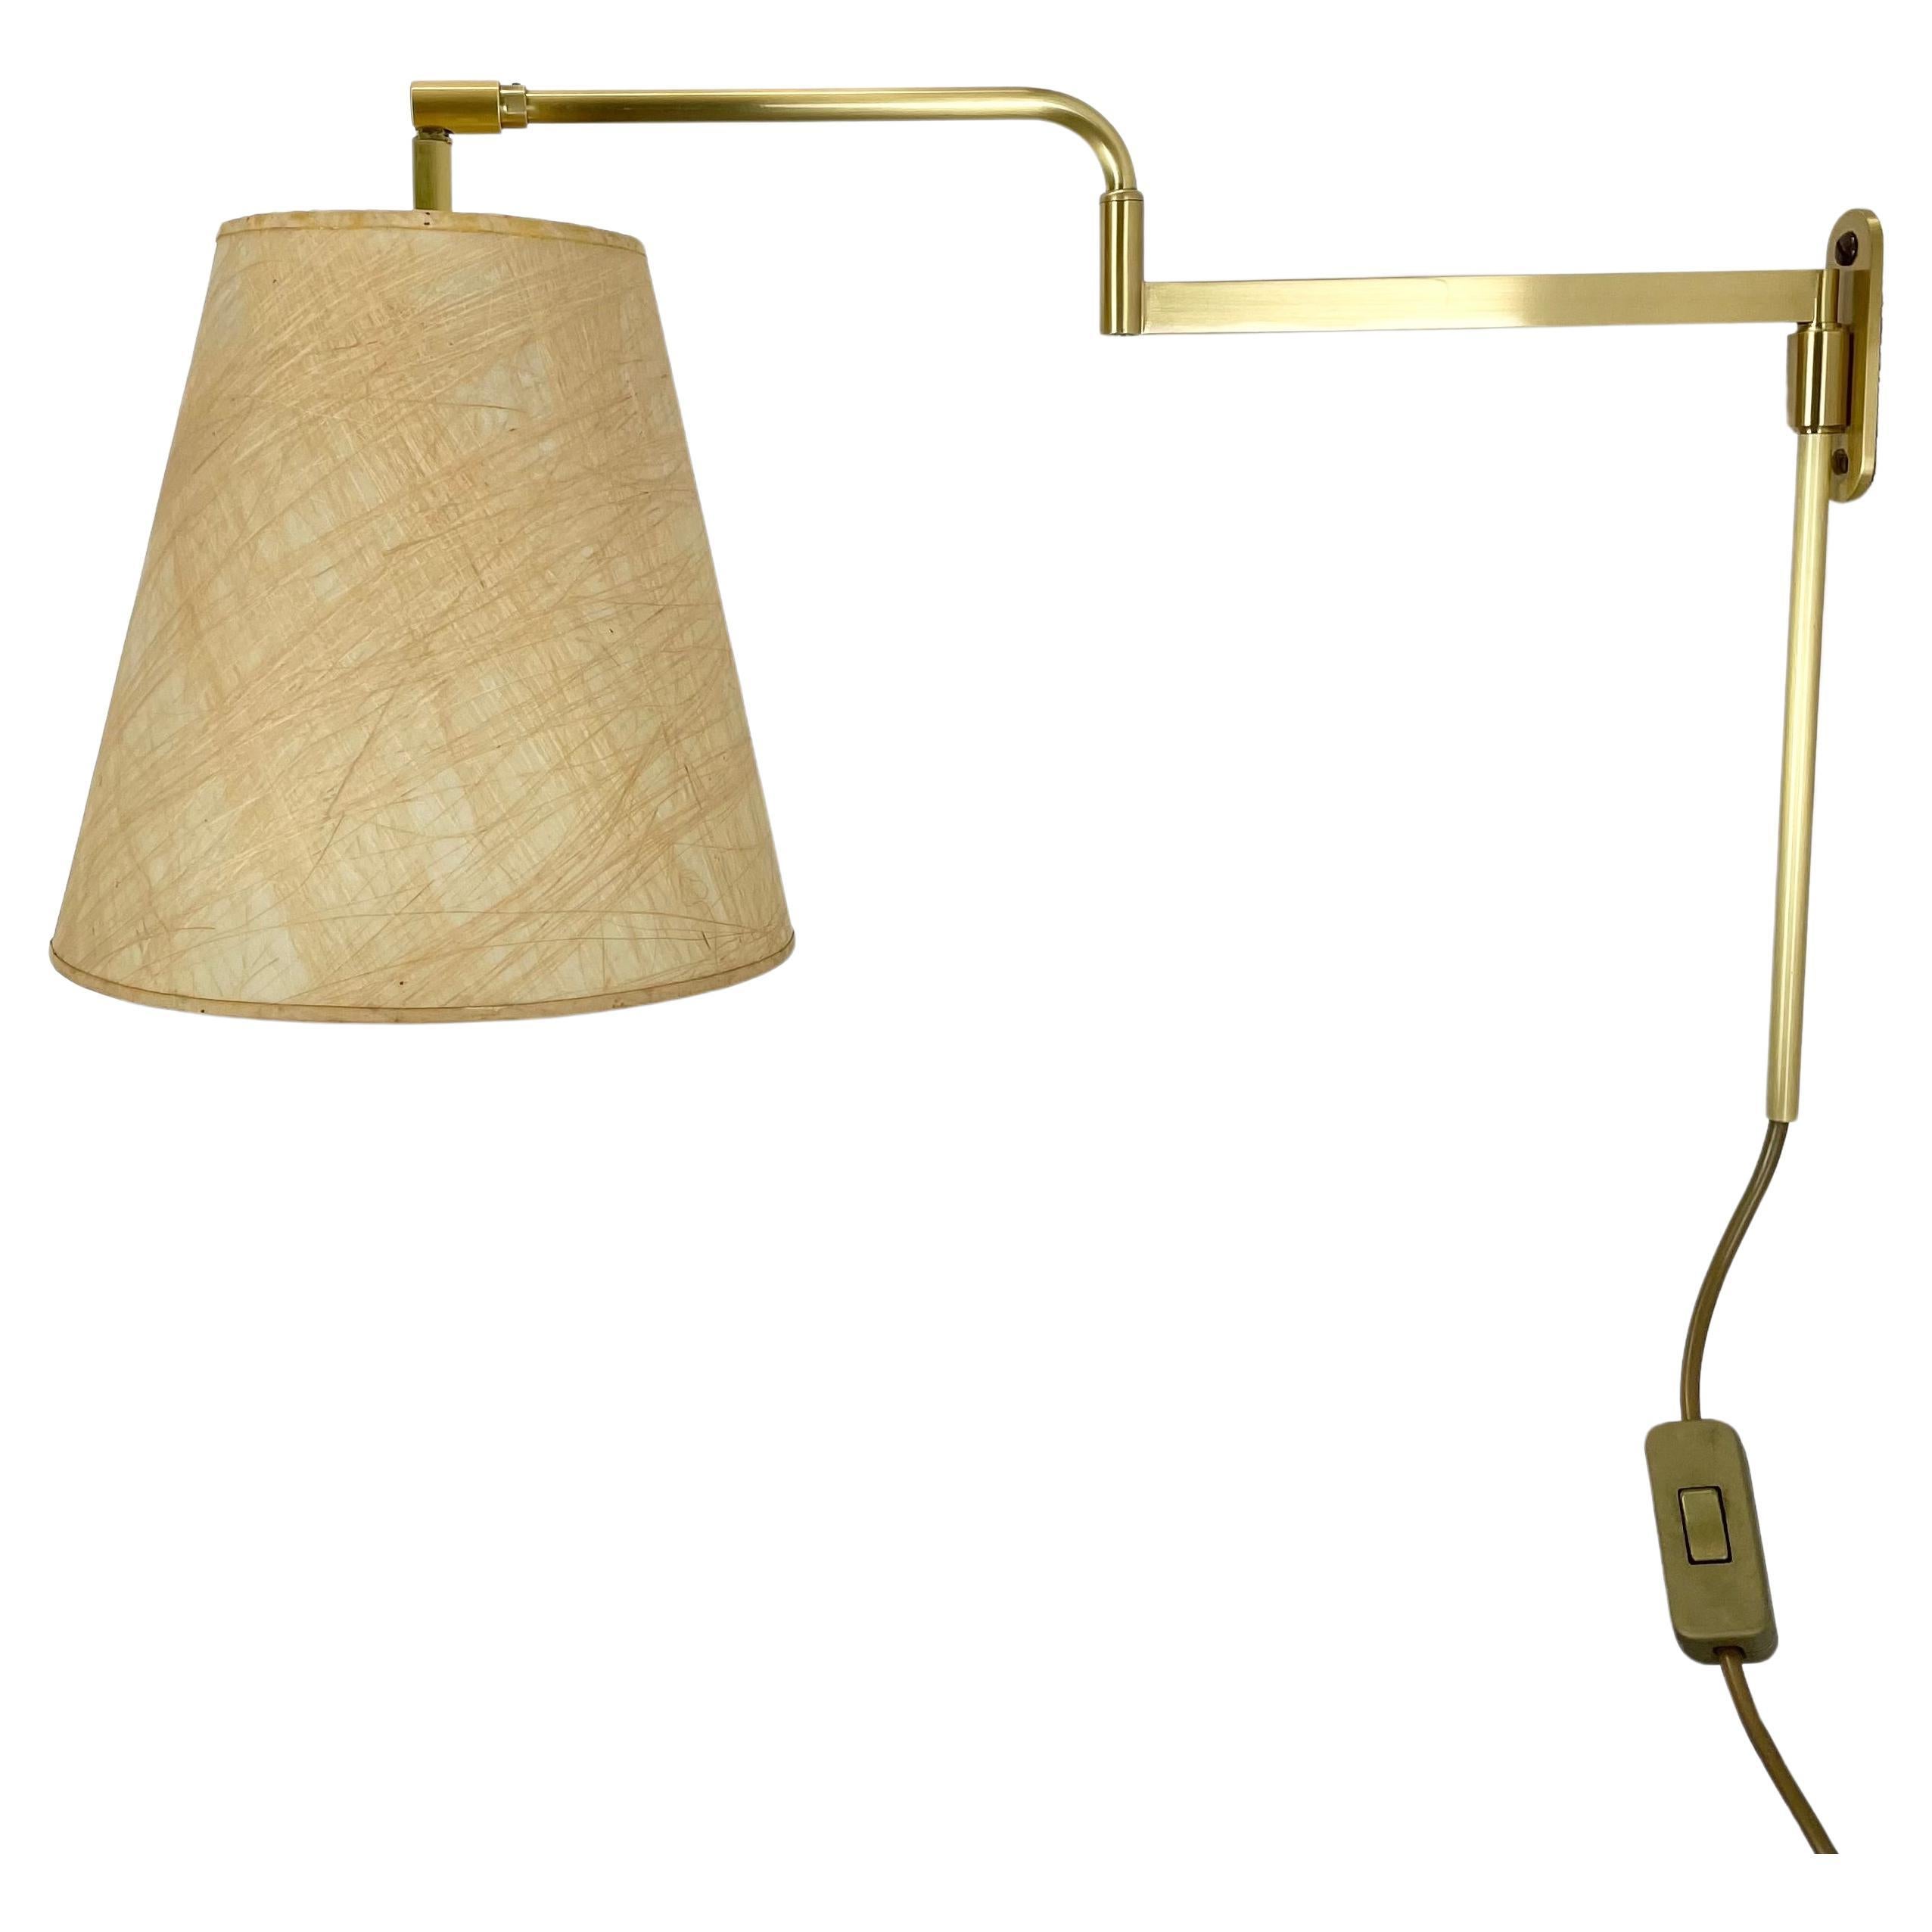 Minimalist Stilnovo Style Adjustable Swing Arm Brass Wall Light Italy 1970s